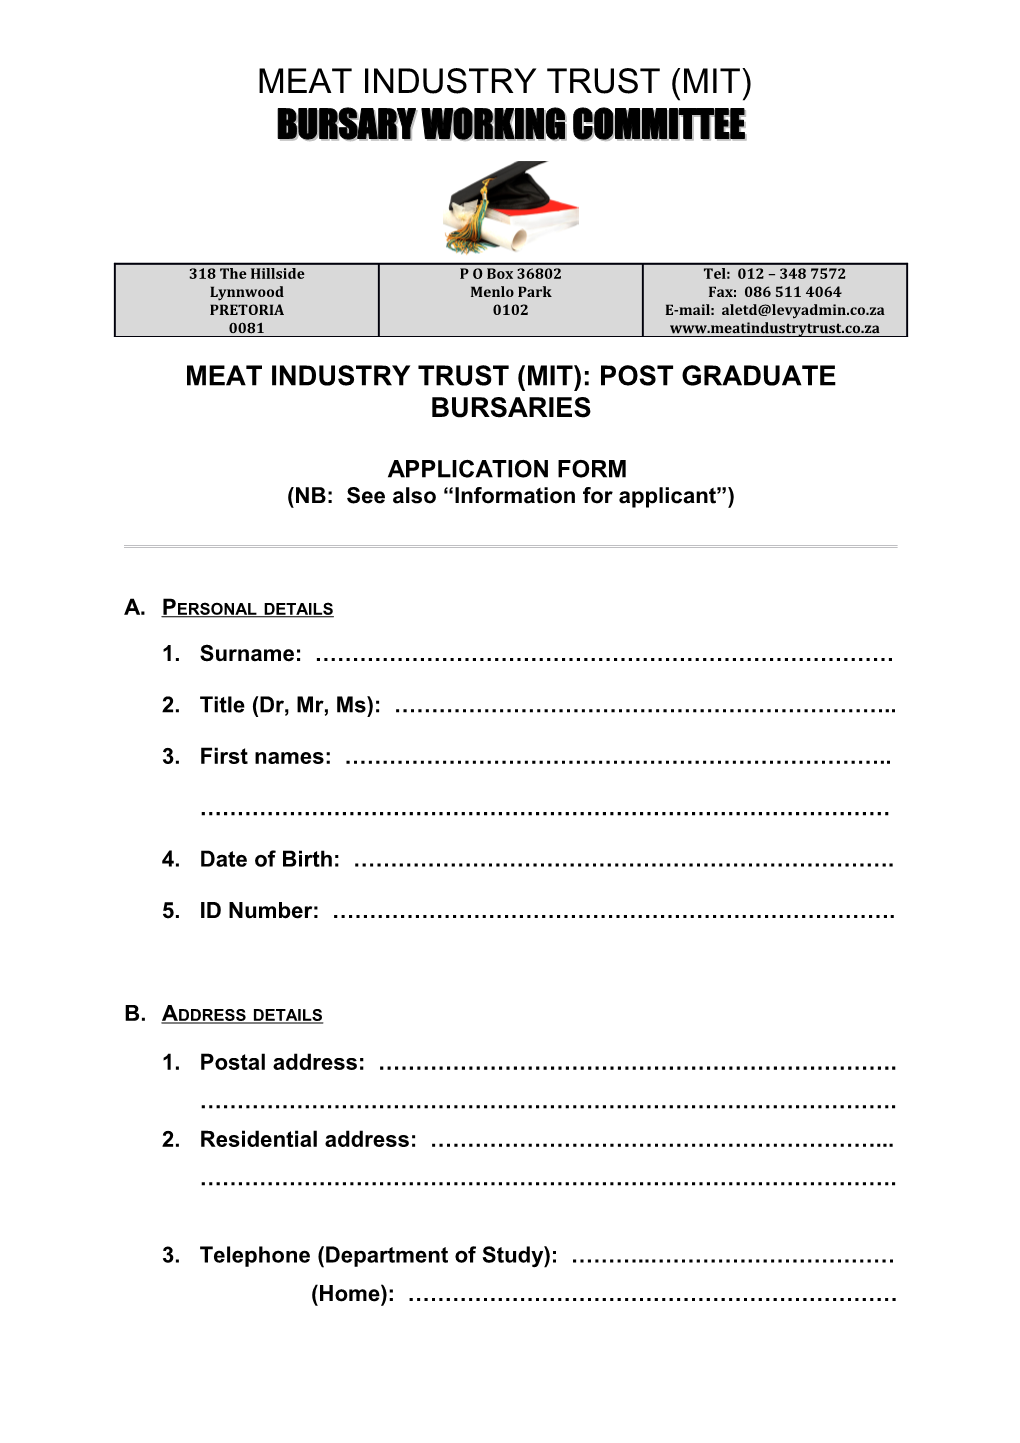 Meat Industry Trust (Mit): Post Graduate Bursaries